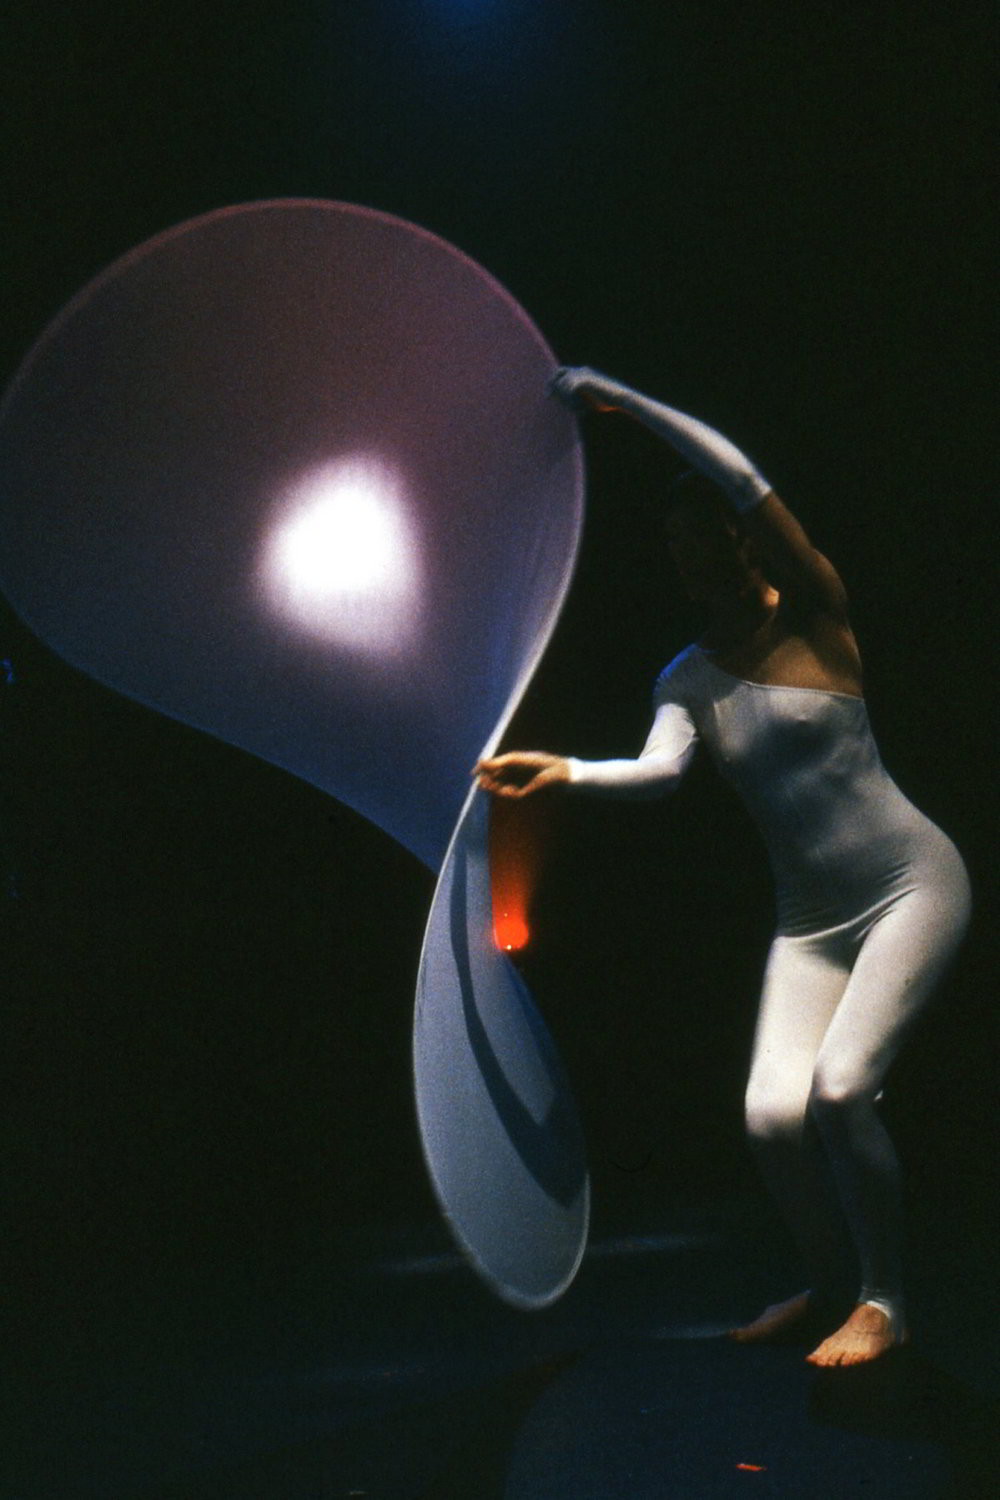 Metafour, Katy Bowman's Fluid Forms segment - a white clad figure swirling transparent figure eight object